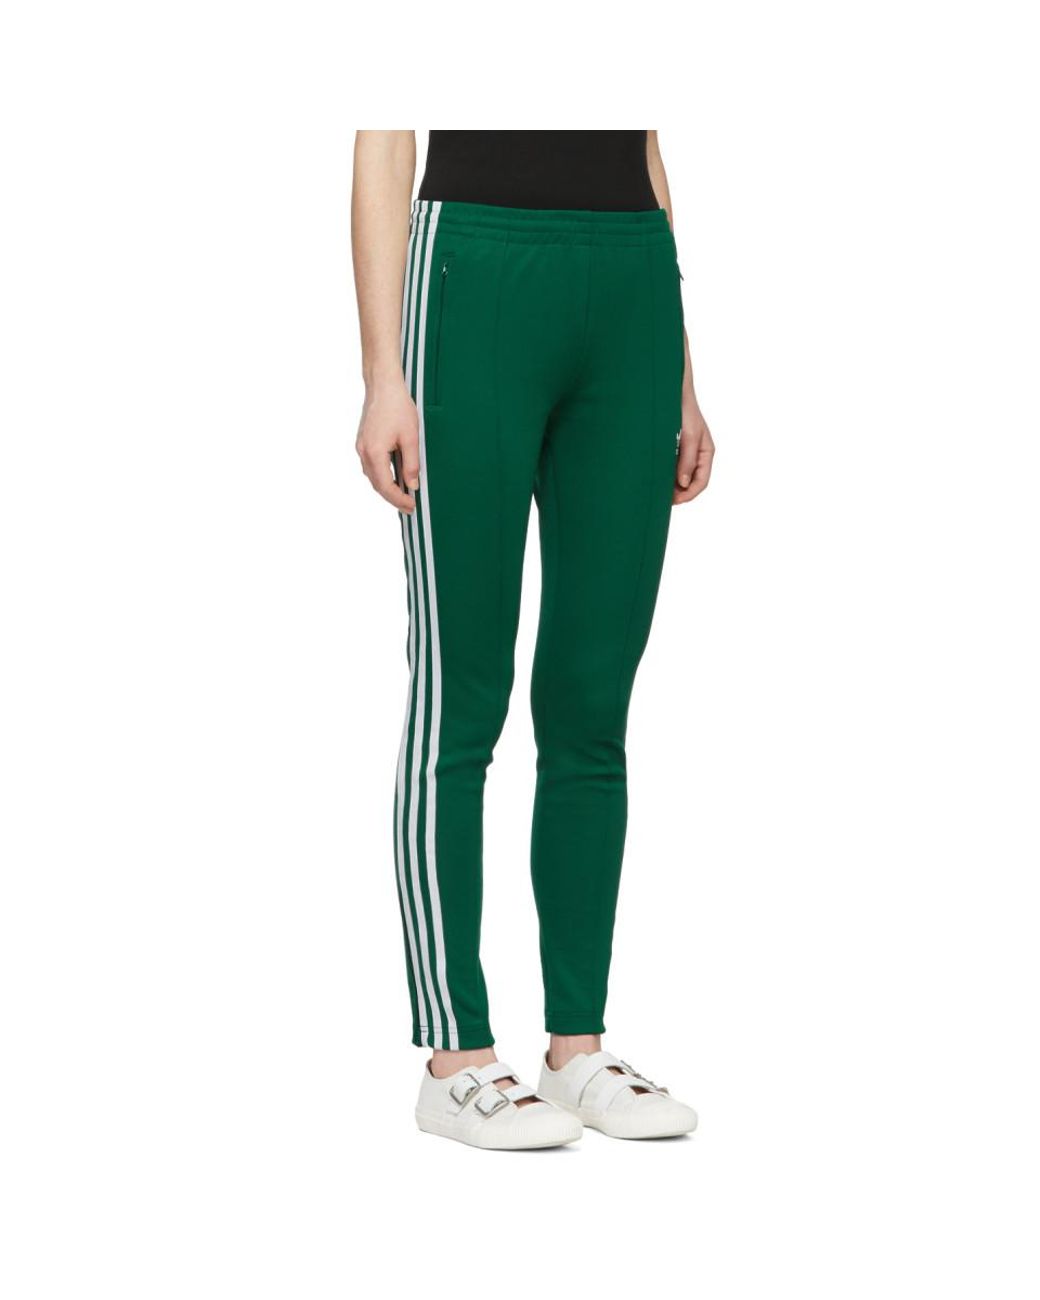 adidas | Pants & Jumpsuits | Y2k Adidas Green Track Pants | Poshmark